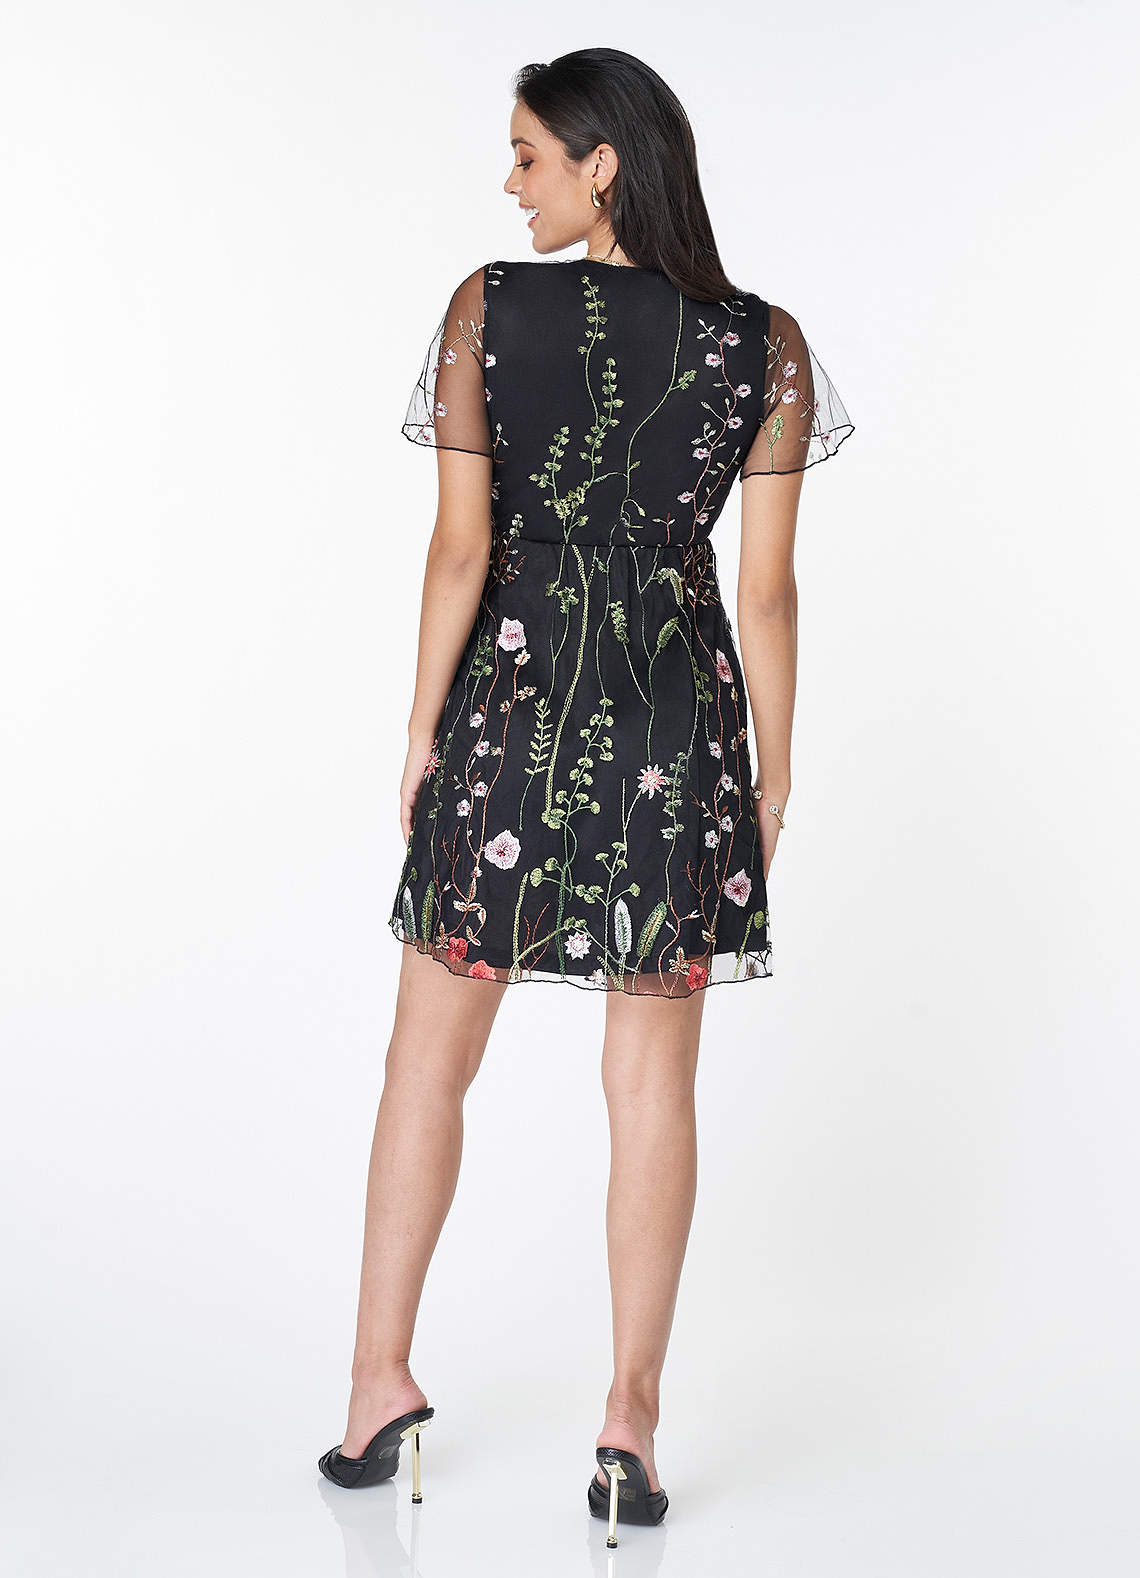 Black Azazie Dress Black Floral Mini Darling Dresses | Romance Embroidery